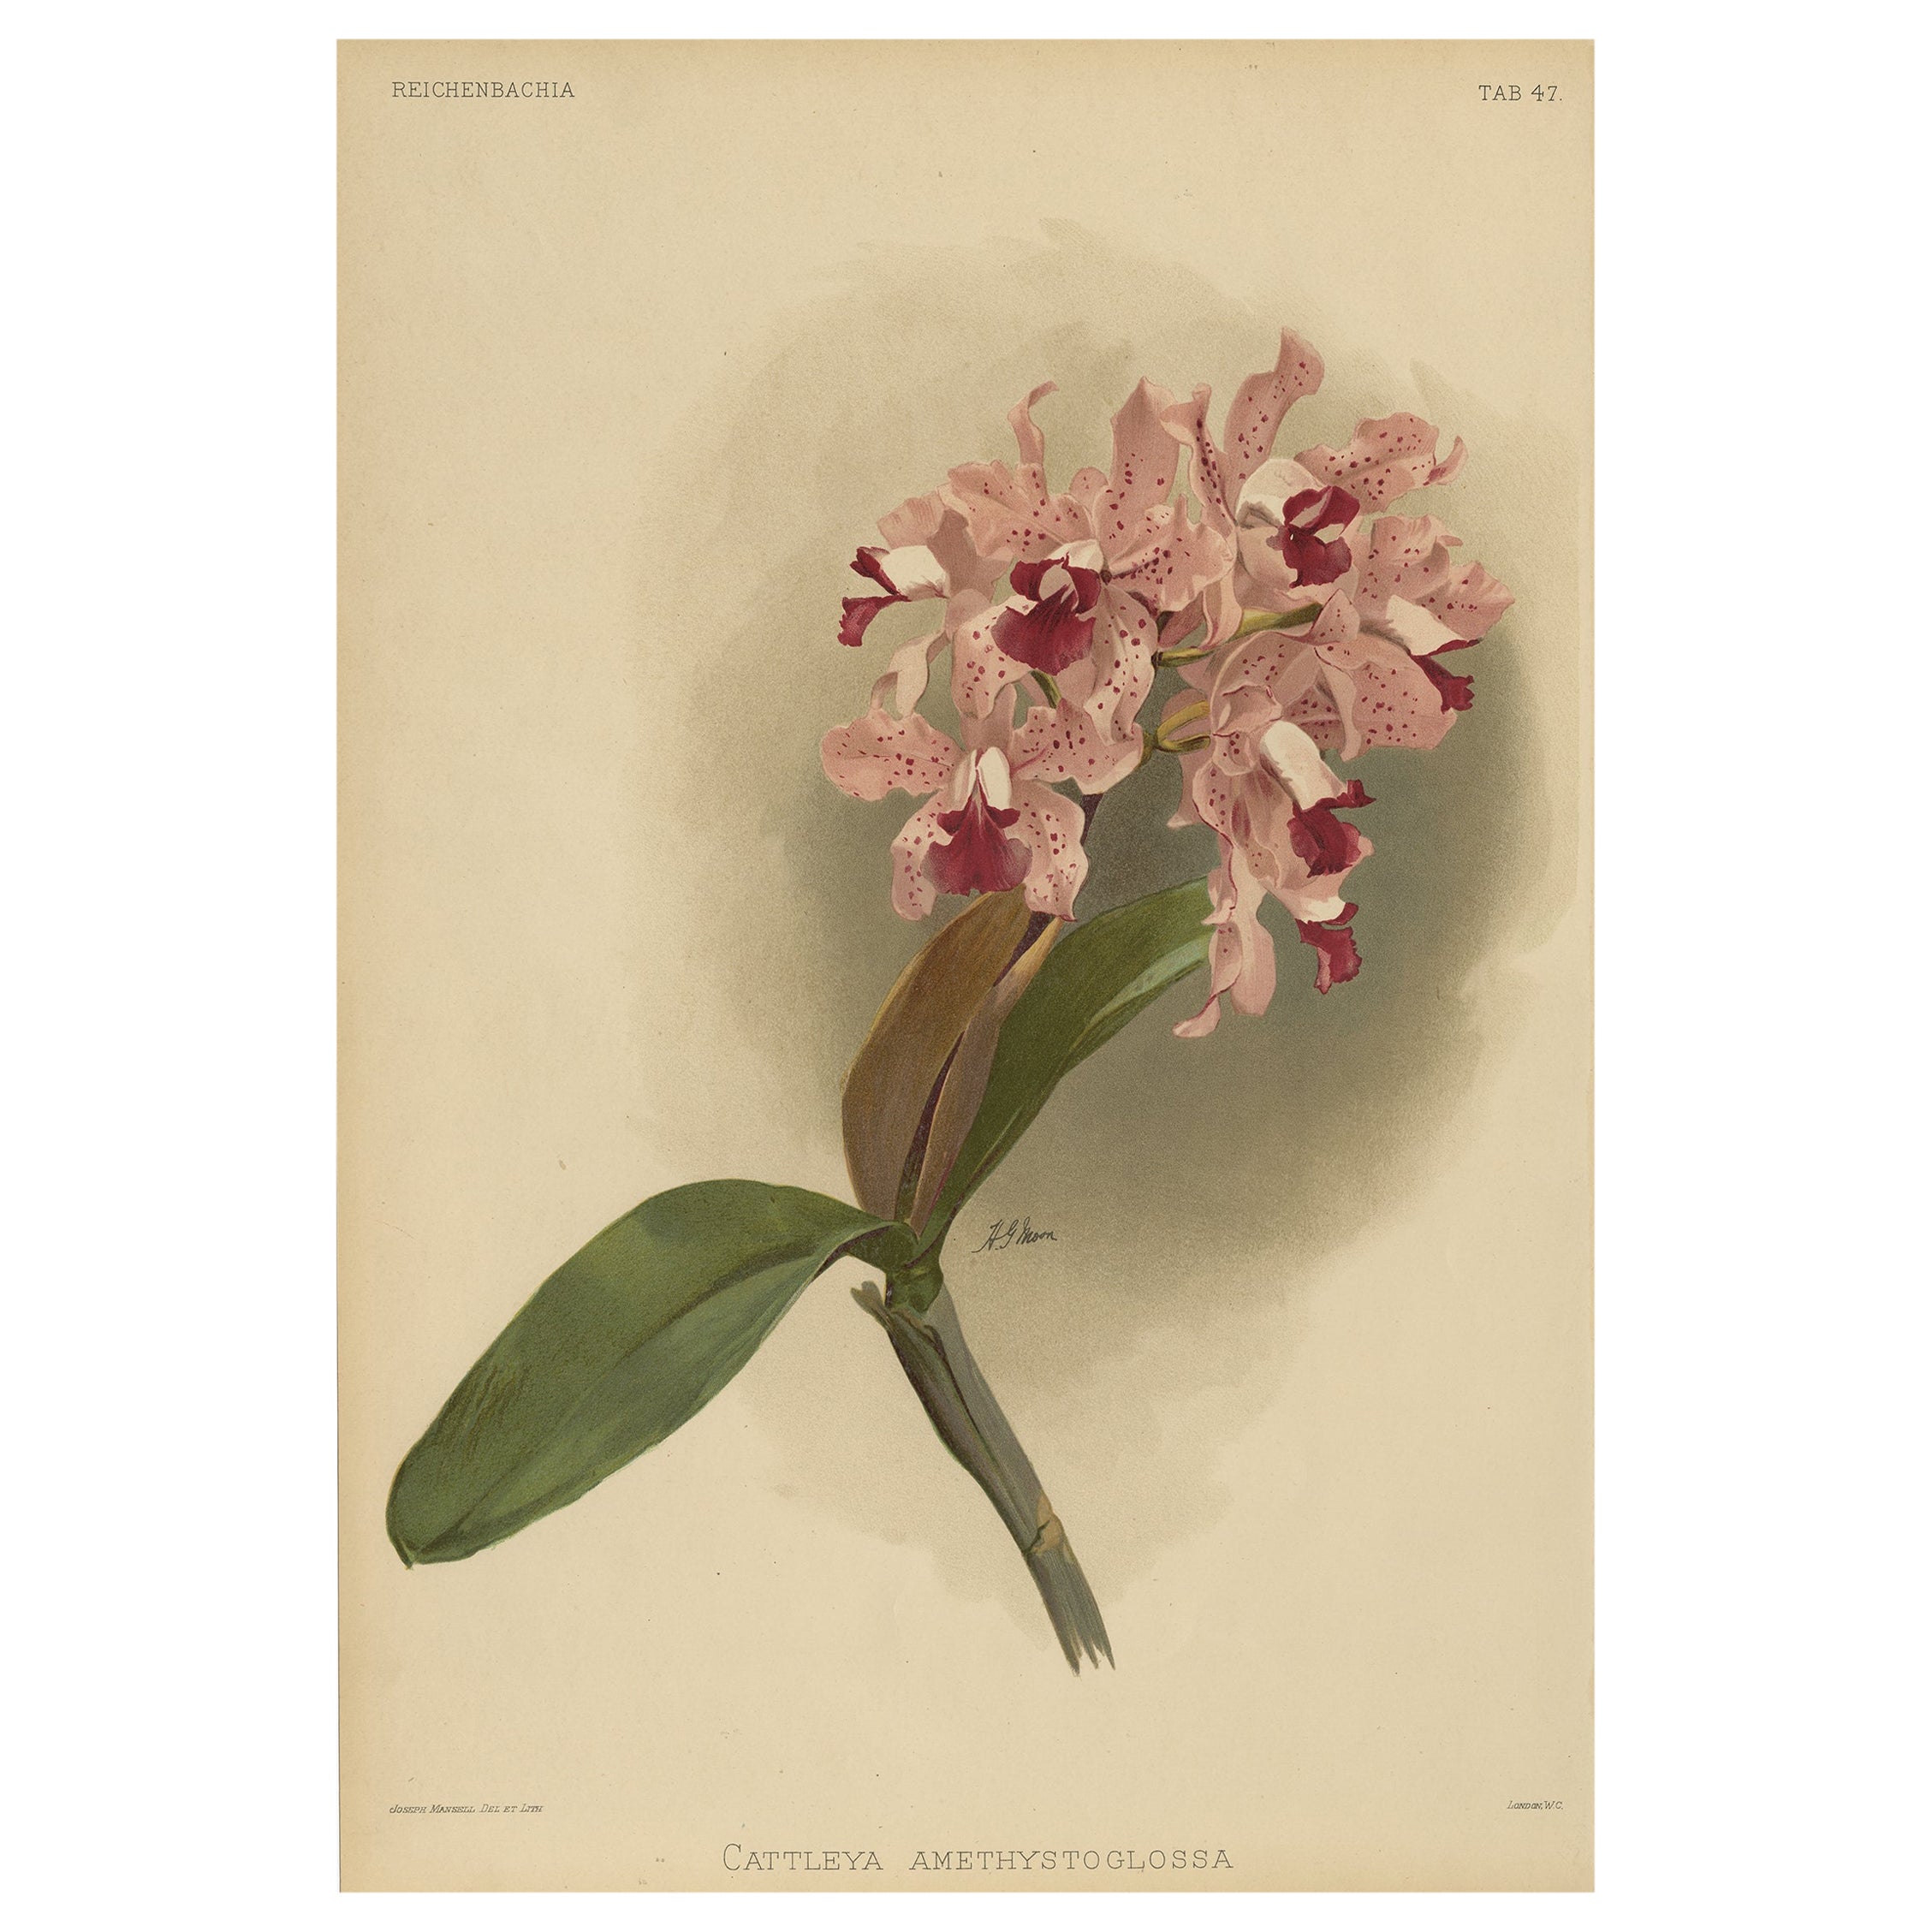 Gorgeous Impressive Large Folio Size Antique Print of an Orchid, 1888 For Sale